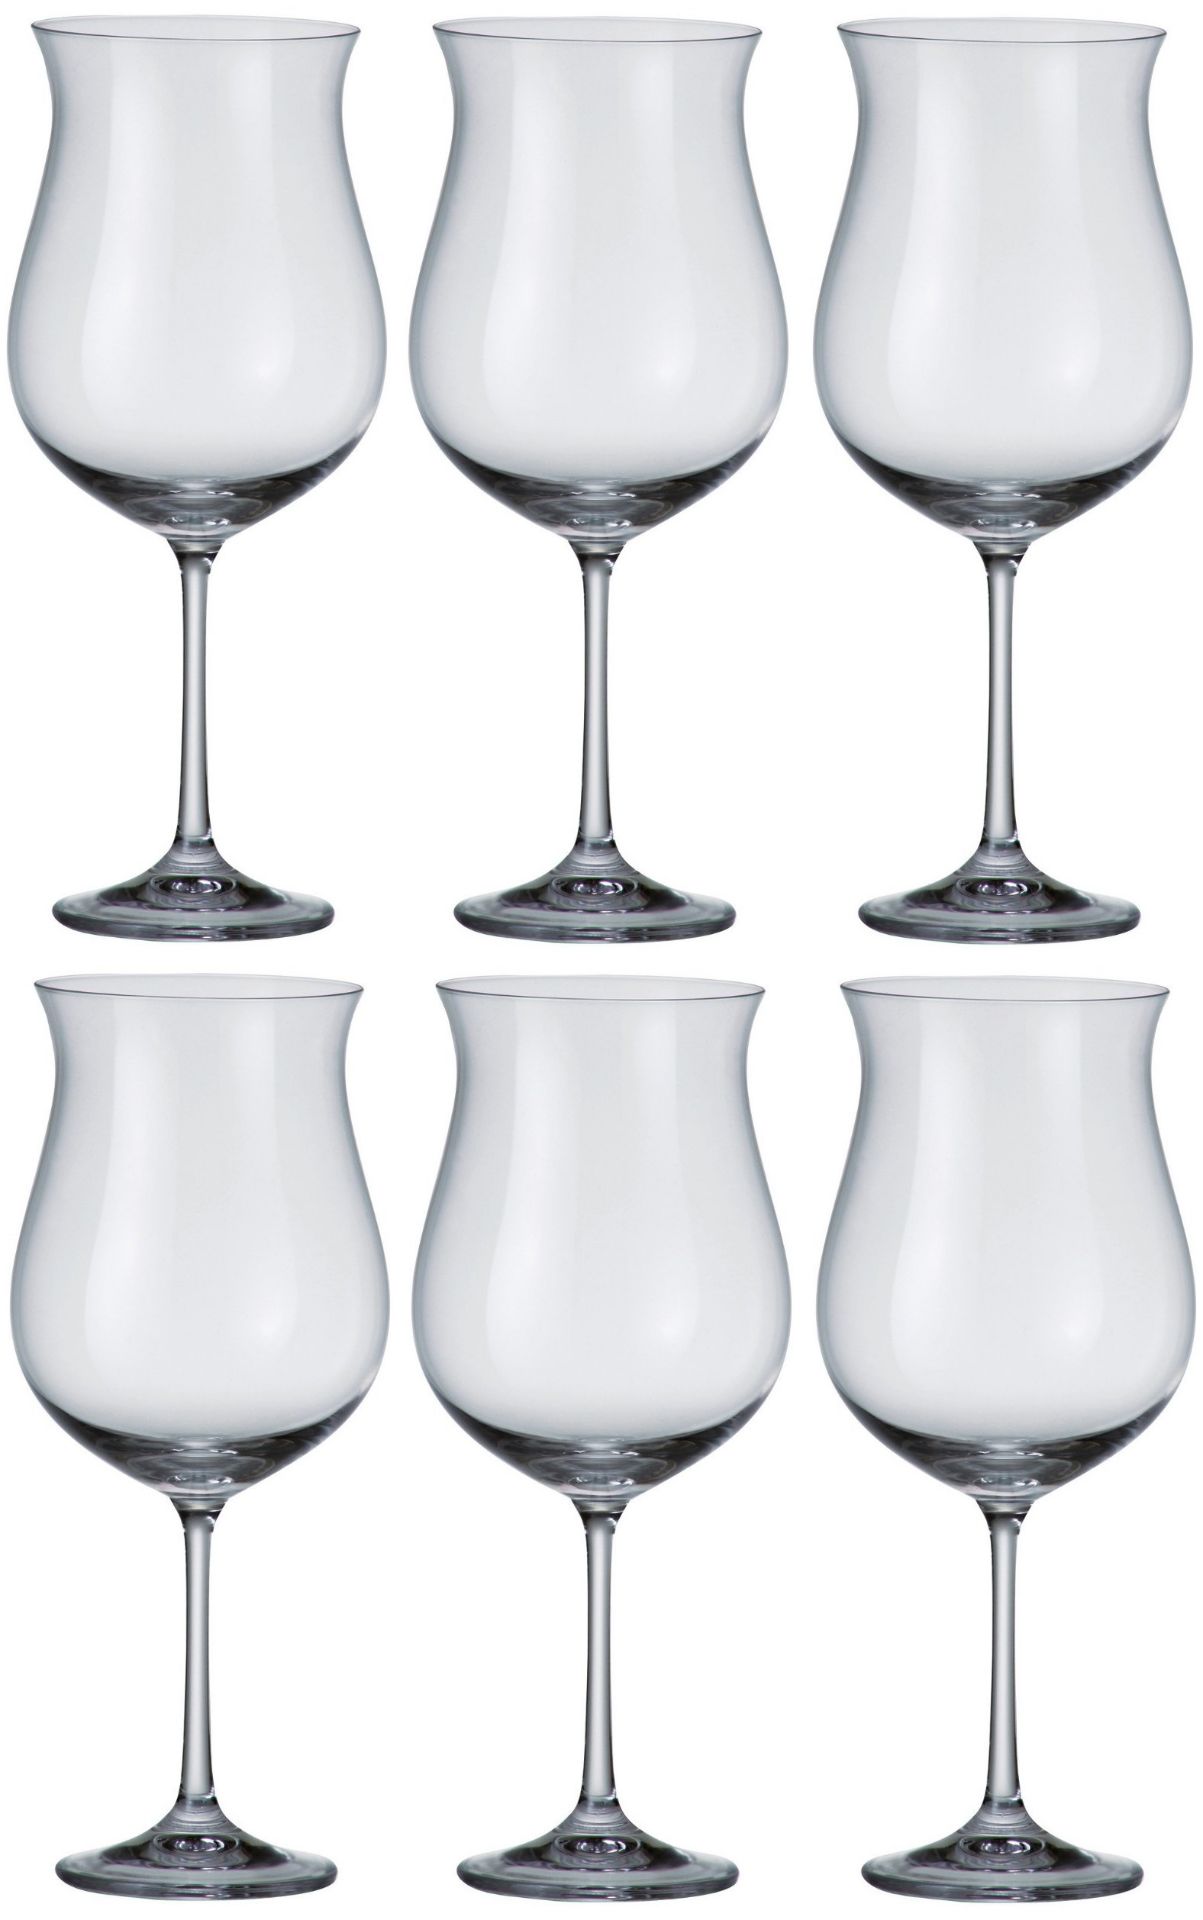 V Brand New Pack of Six 640ml Red Wine Glasses - Large Sized Bowl - Dishwasher Safe - Durable